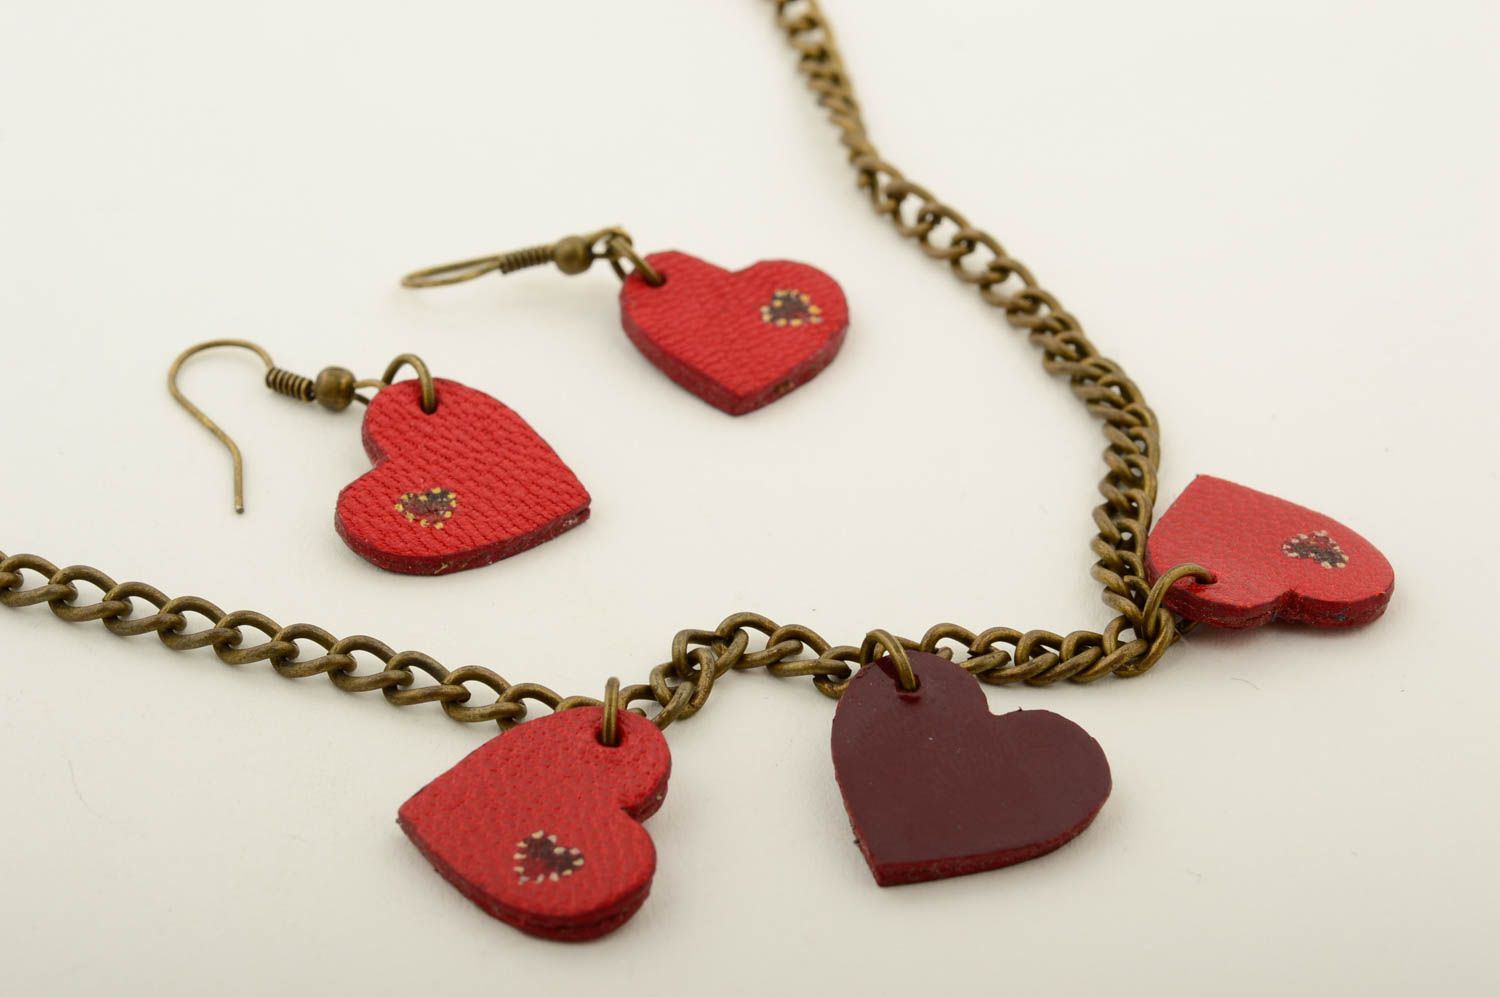 Stylish handmade leather earrings necklace design costume jewelry set ideas photo 4